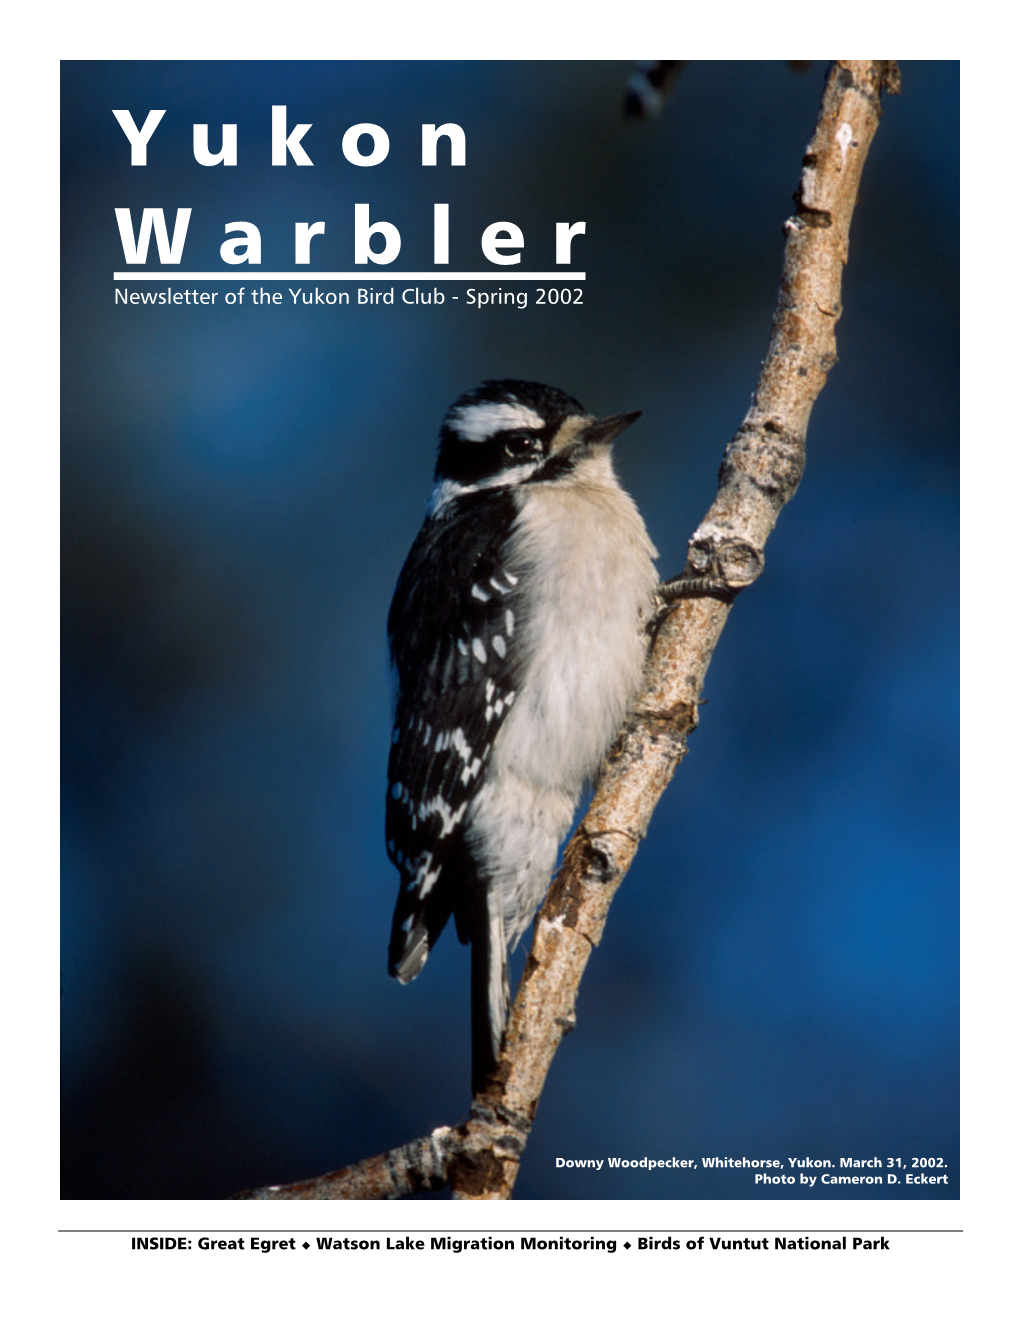 Warbler 2002 Spring